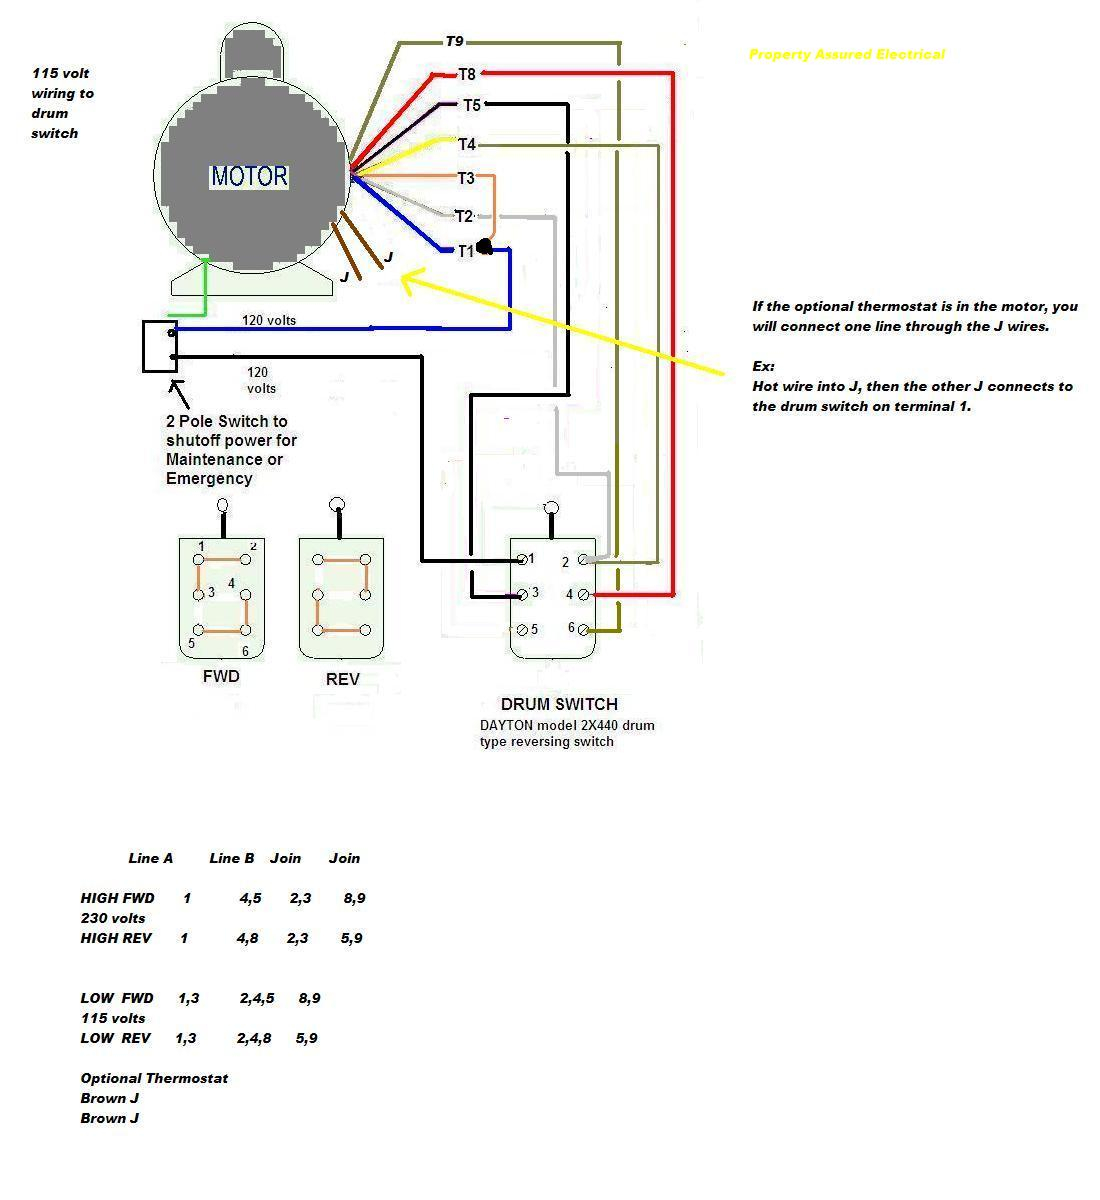 baldor motors wiring diagram Download-Wiring Diagram Baldor Motor Diagrams 3 Phase 9 Wire Best 208V 8 1-i